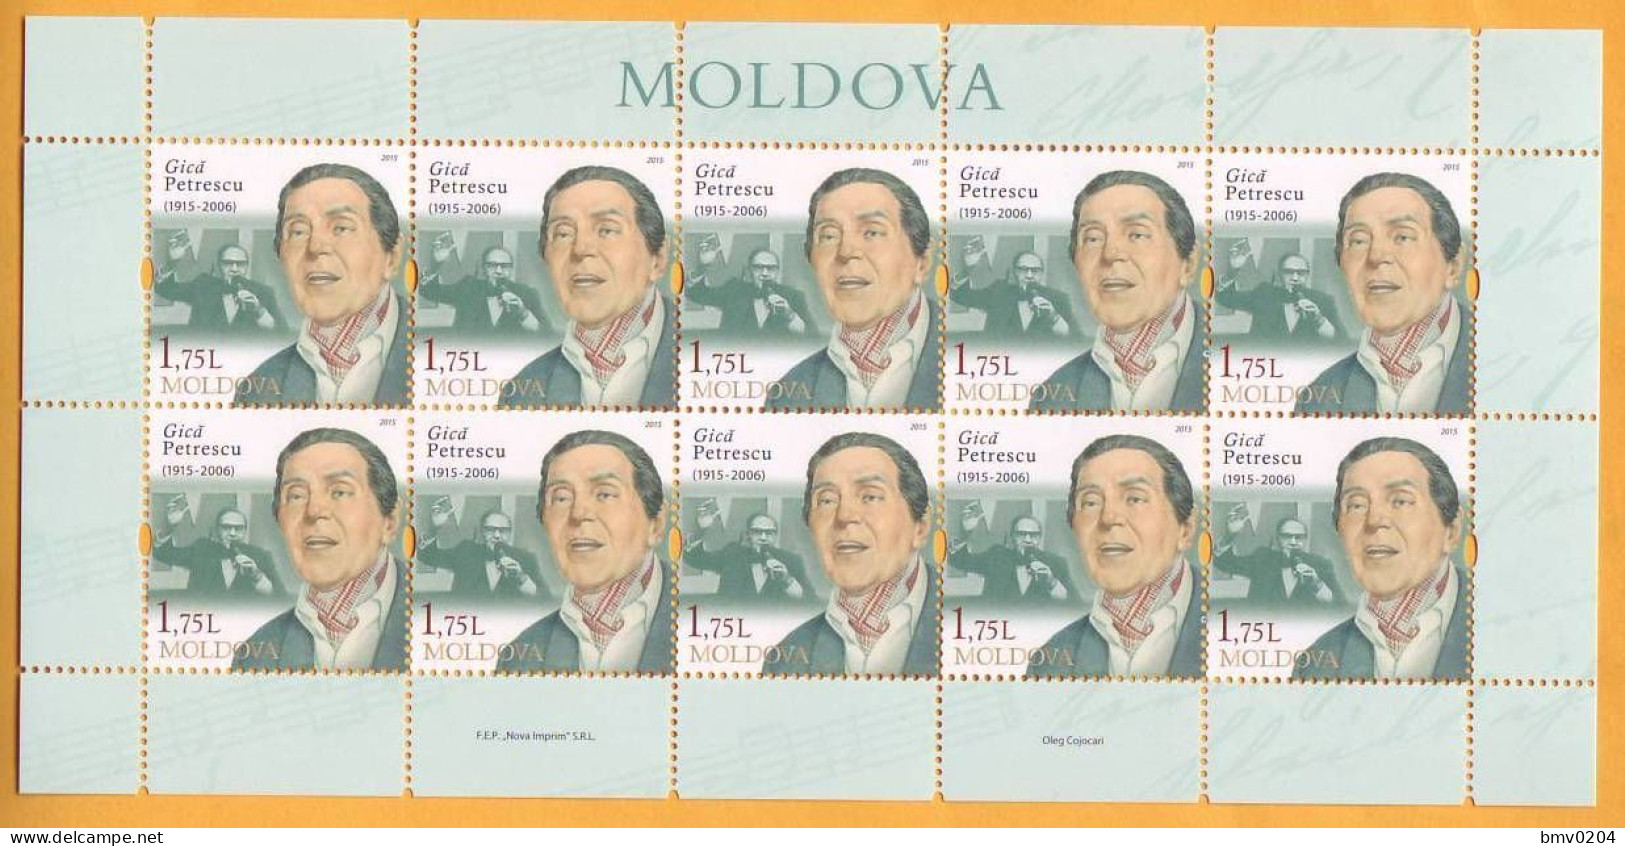 2015 Moldova Moldavie Moldau Sheet Romania  Gicu Petrescu  Mint 1.75 - Moldavie